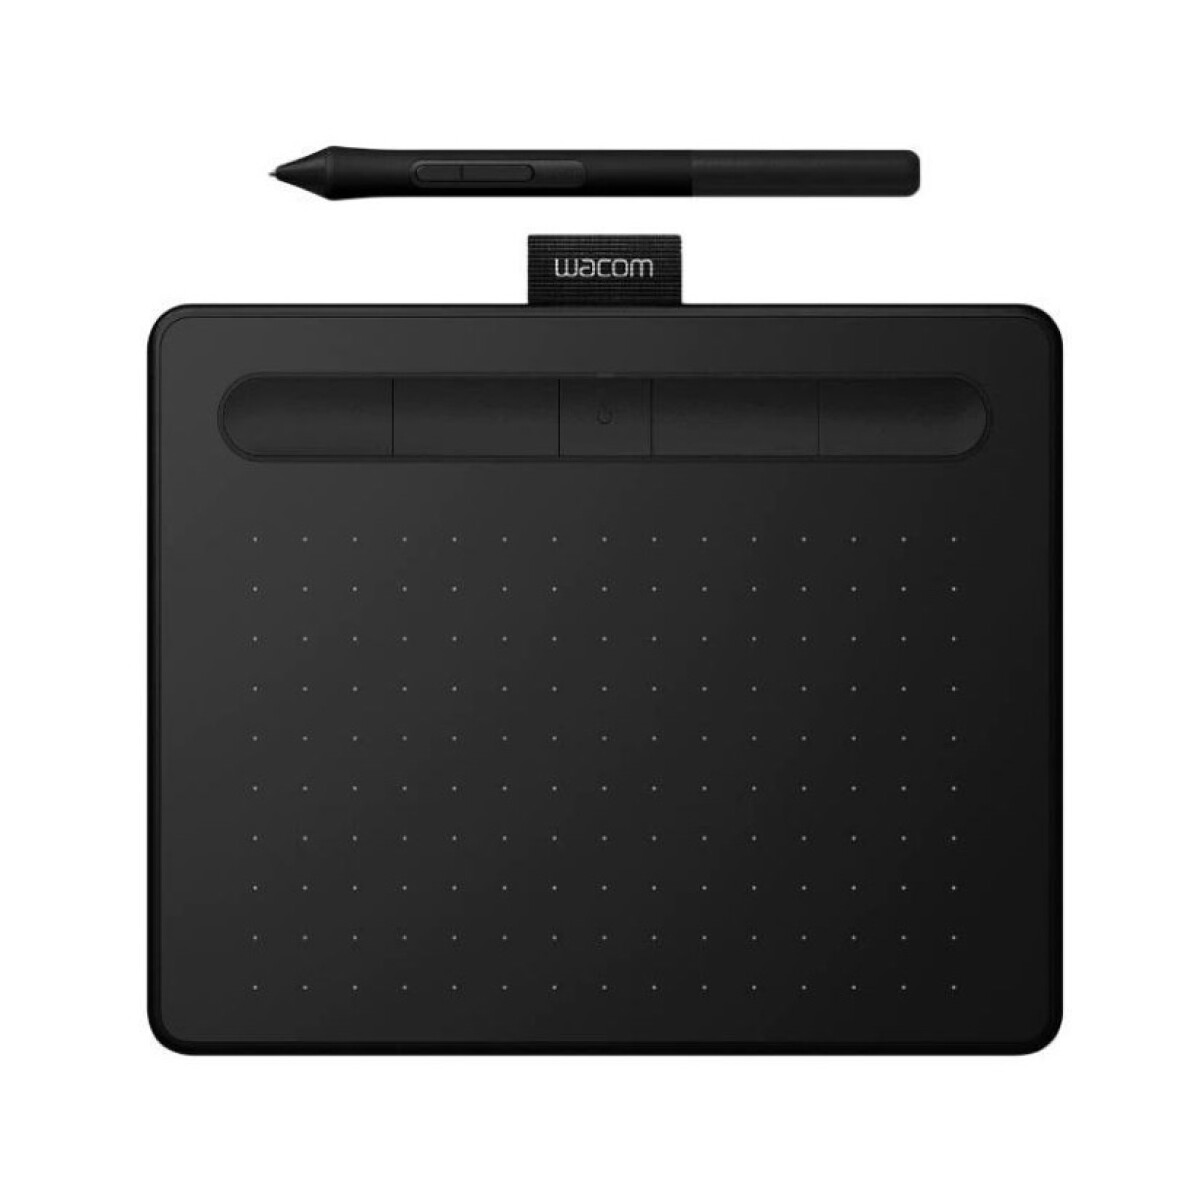 Tablet digitalizadora wacom intuos ctl-4100wl - Black 